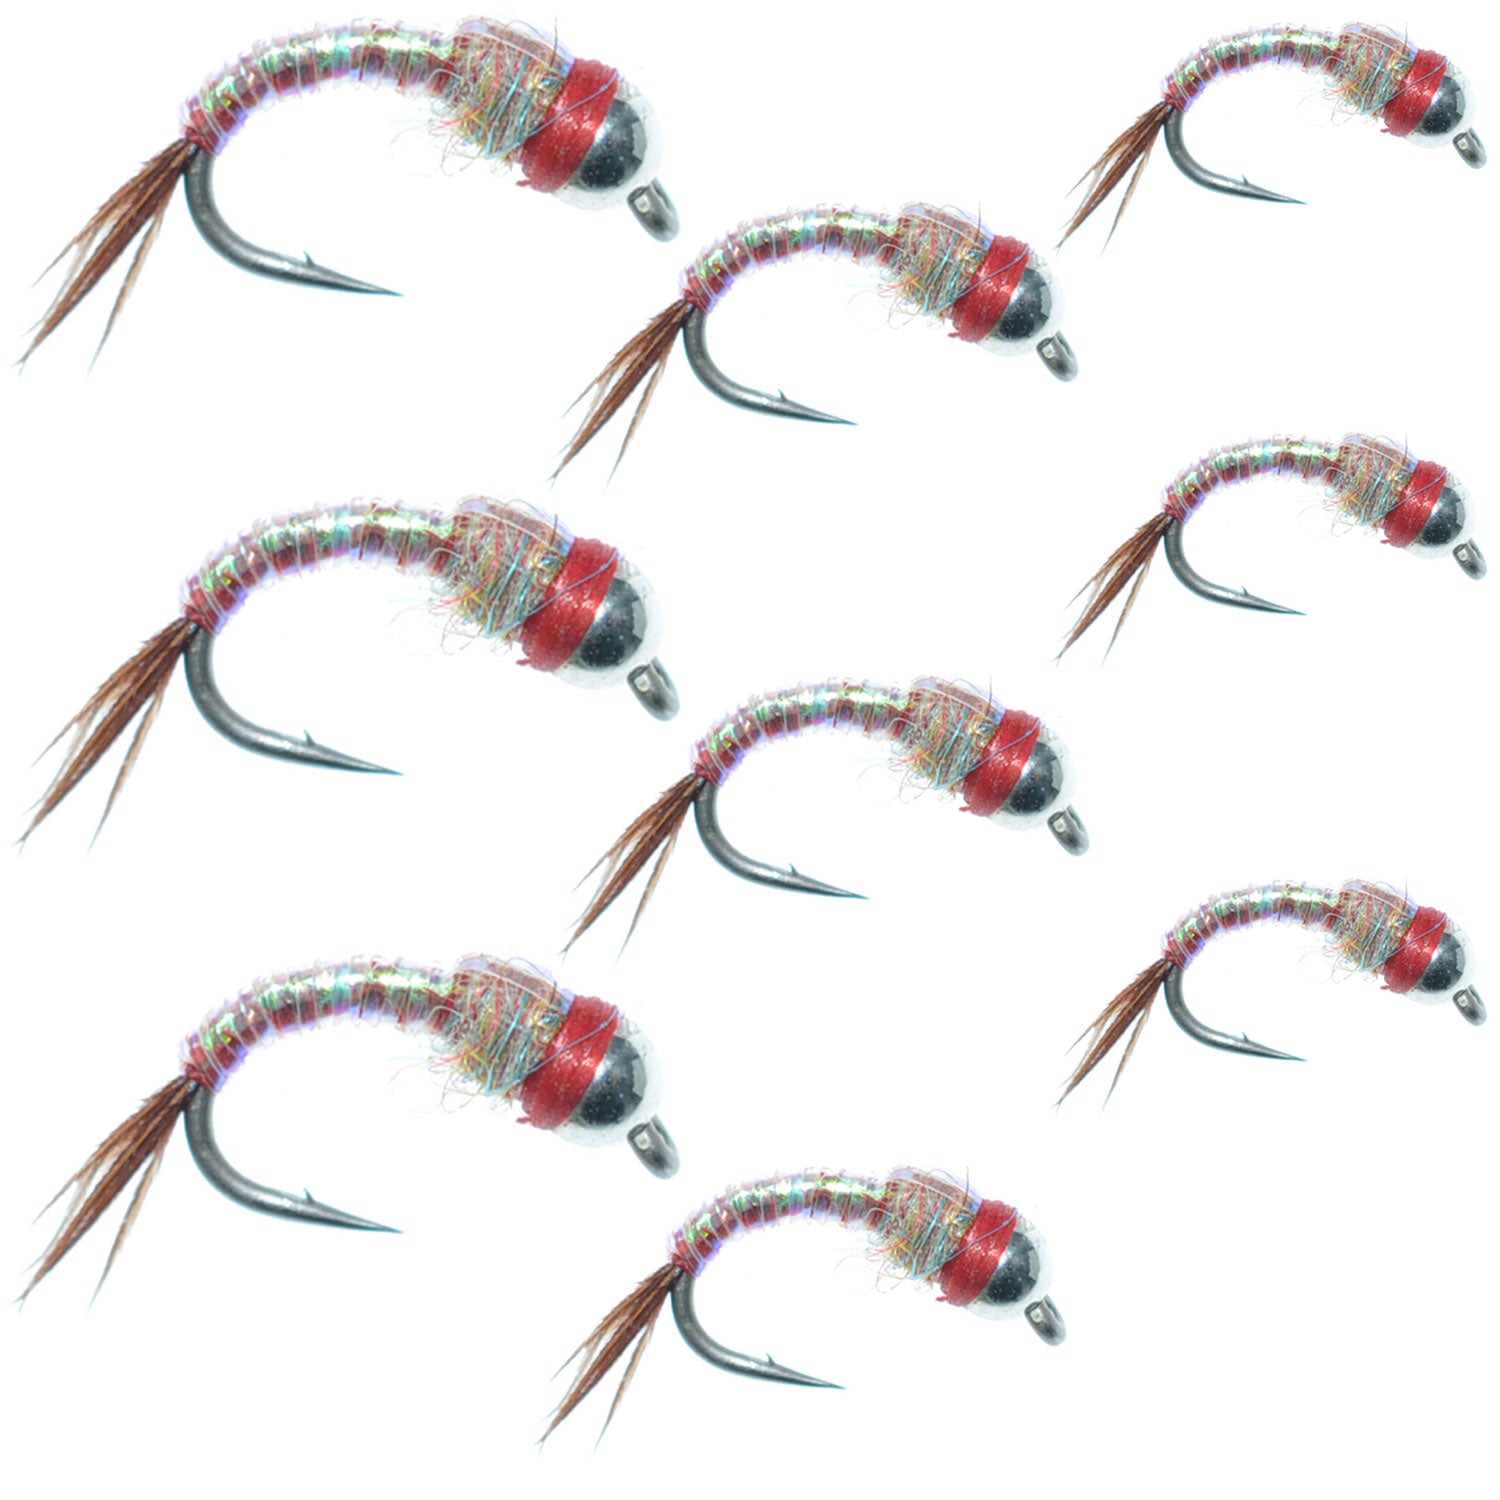 Bead Head Rainbow Warrior Midge Assortment  - Silver Bead Head - 3 Each of 3 Sizes 14, 16, 18